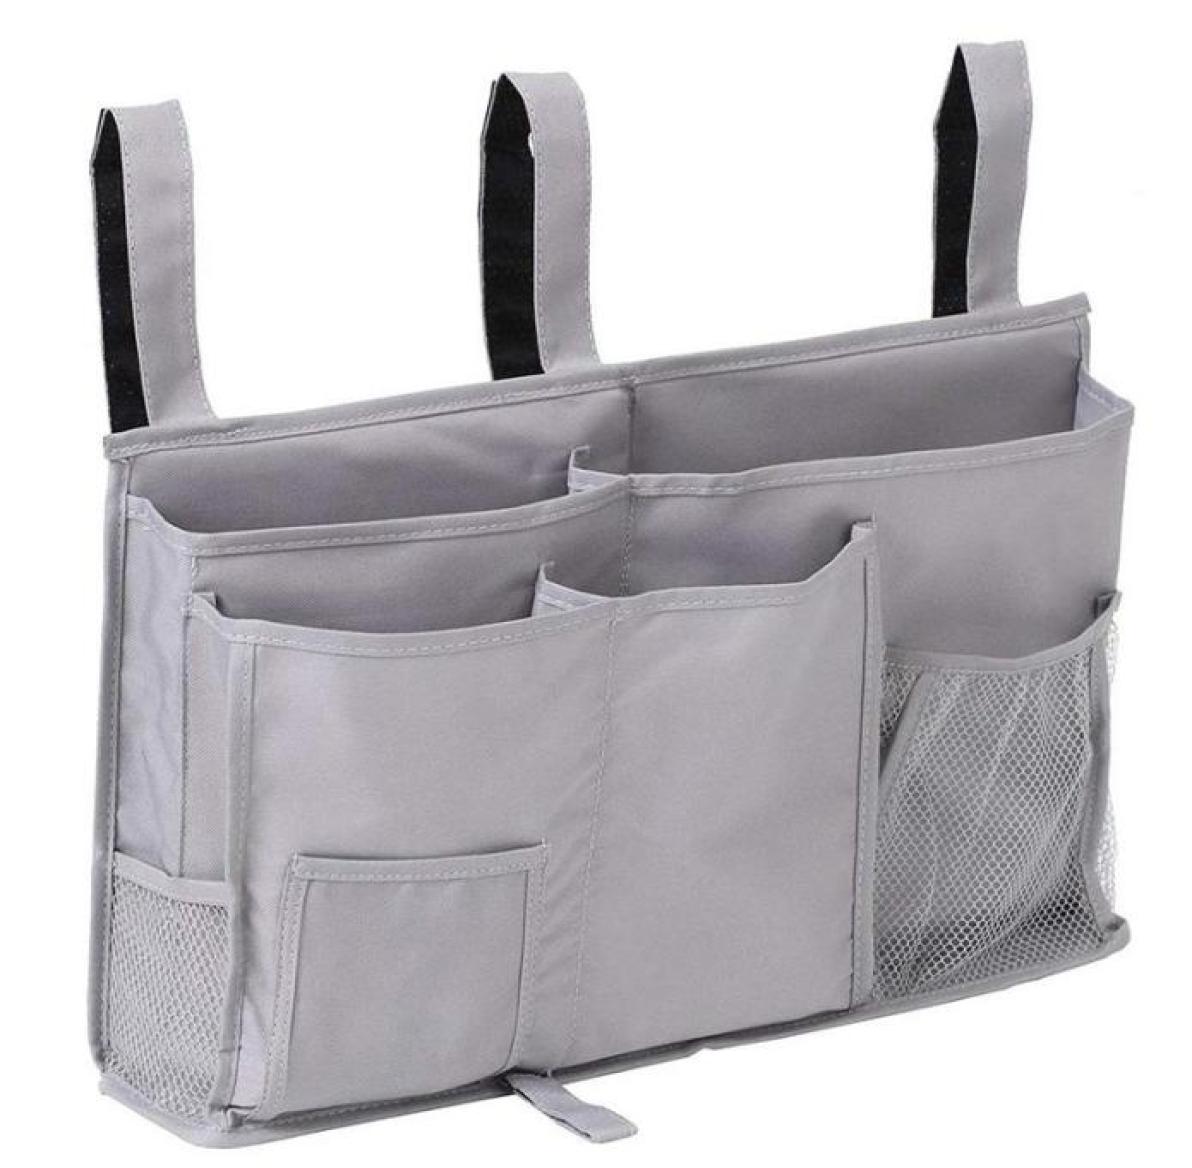 

Hanging Baskets Bedside Caddy Storage Bag Holder Organizer With 8 Pockets For Bunk Dorm Rooms And Bed Rails5256992